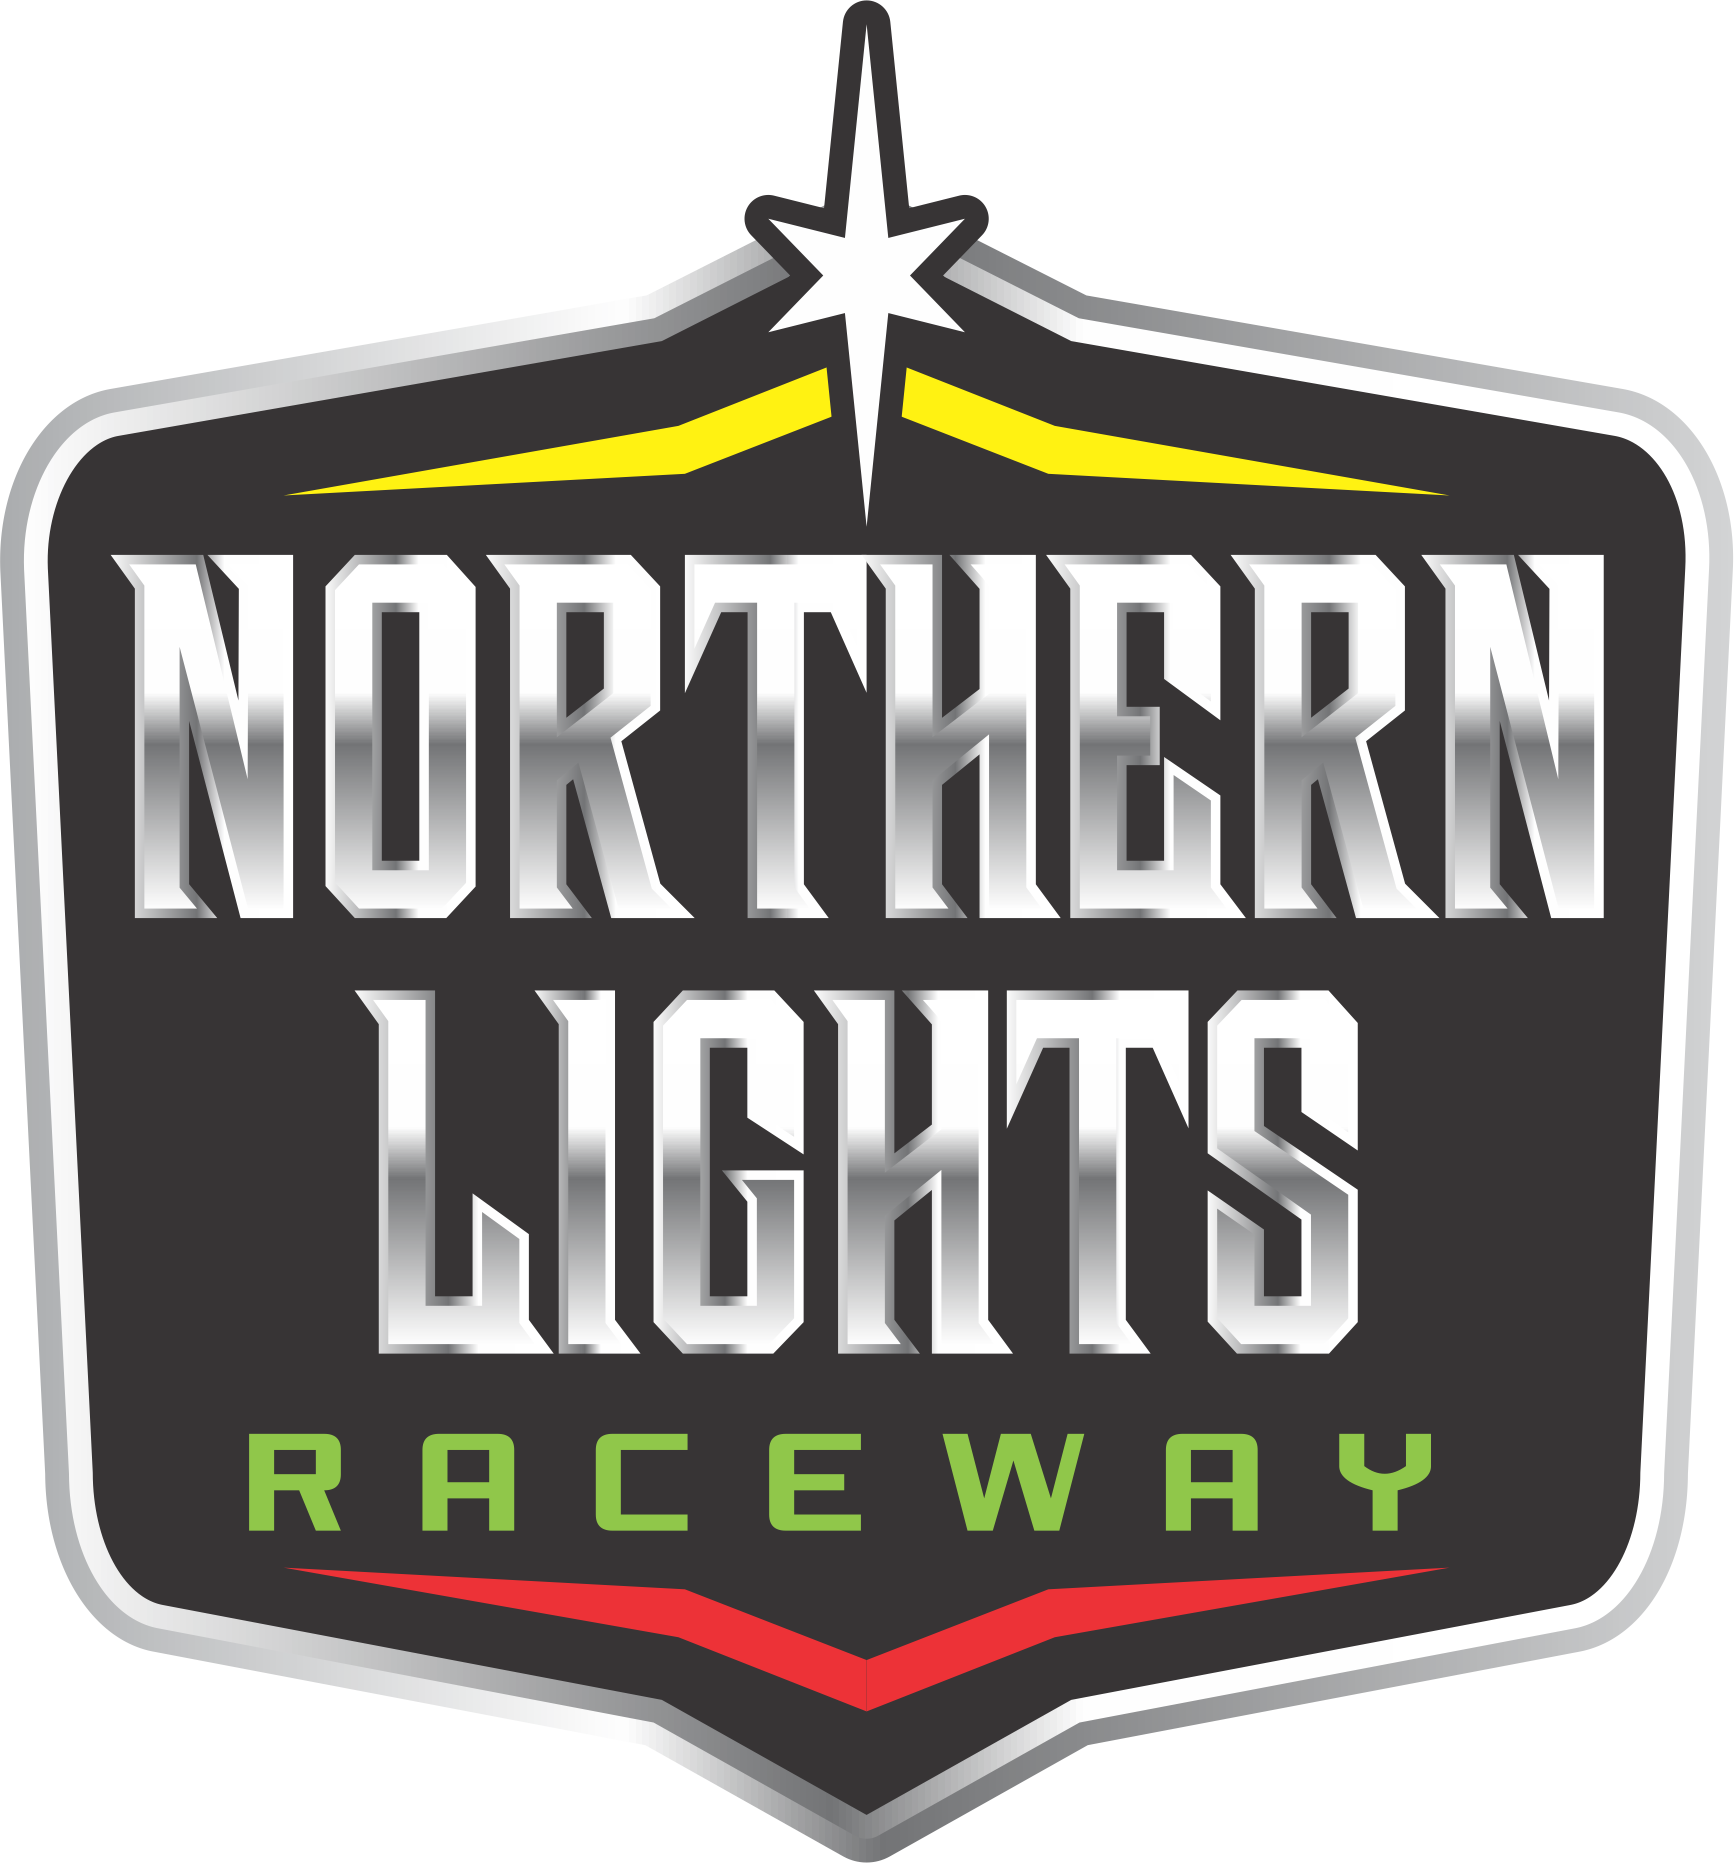 NORTHERN LIGHTS RACEWAY